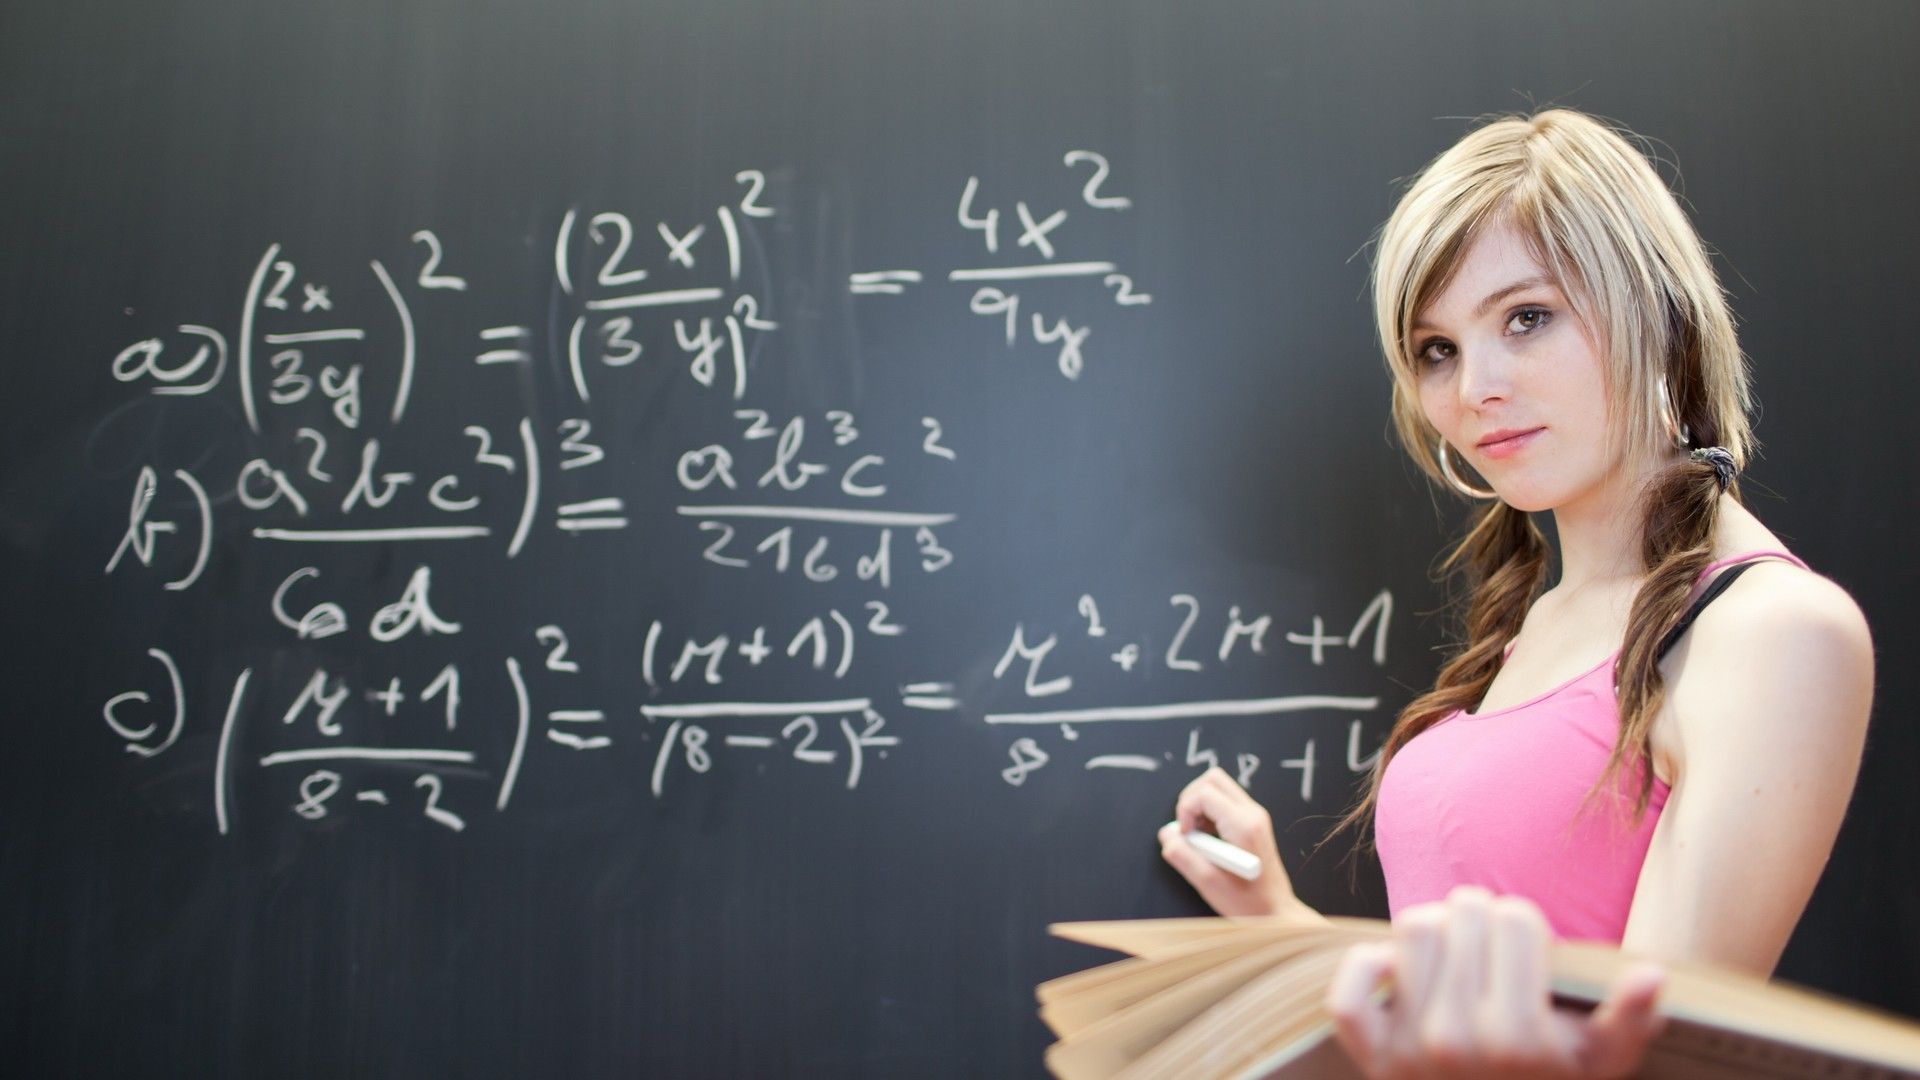 blondes, women, board, models, mathematics, charts, students, mathematical formula wallpaper